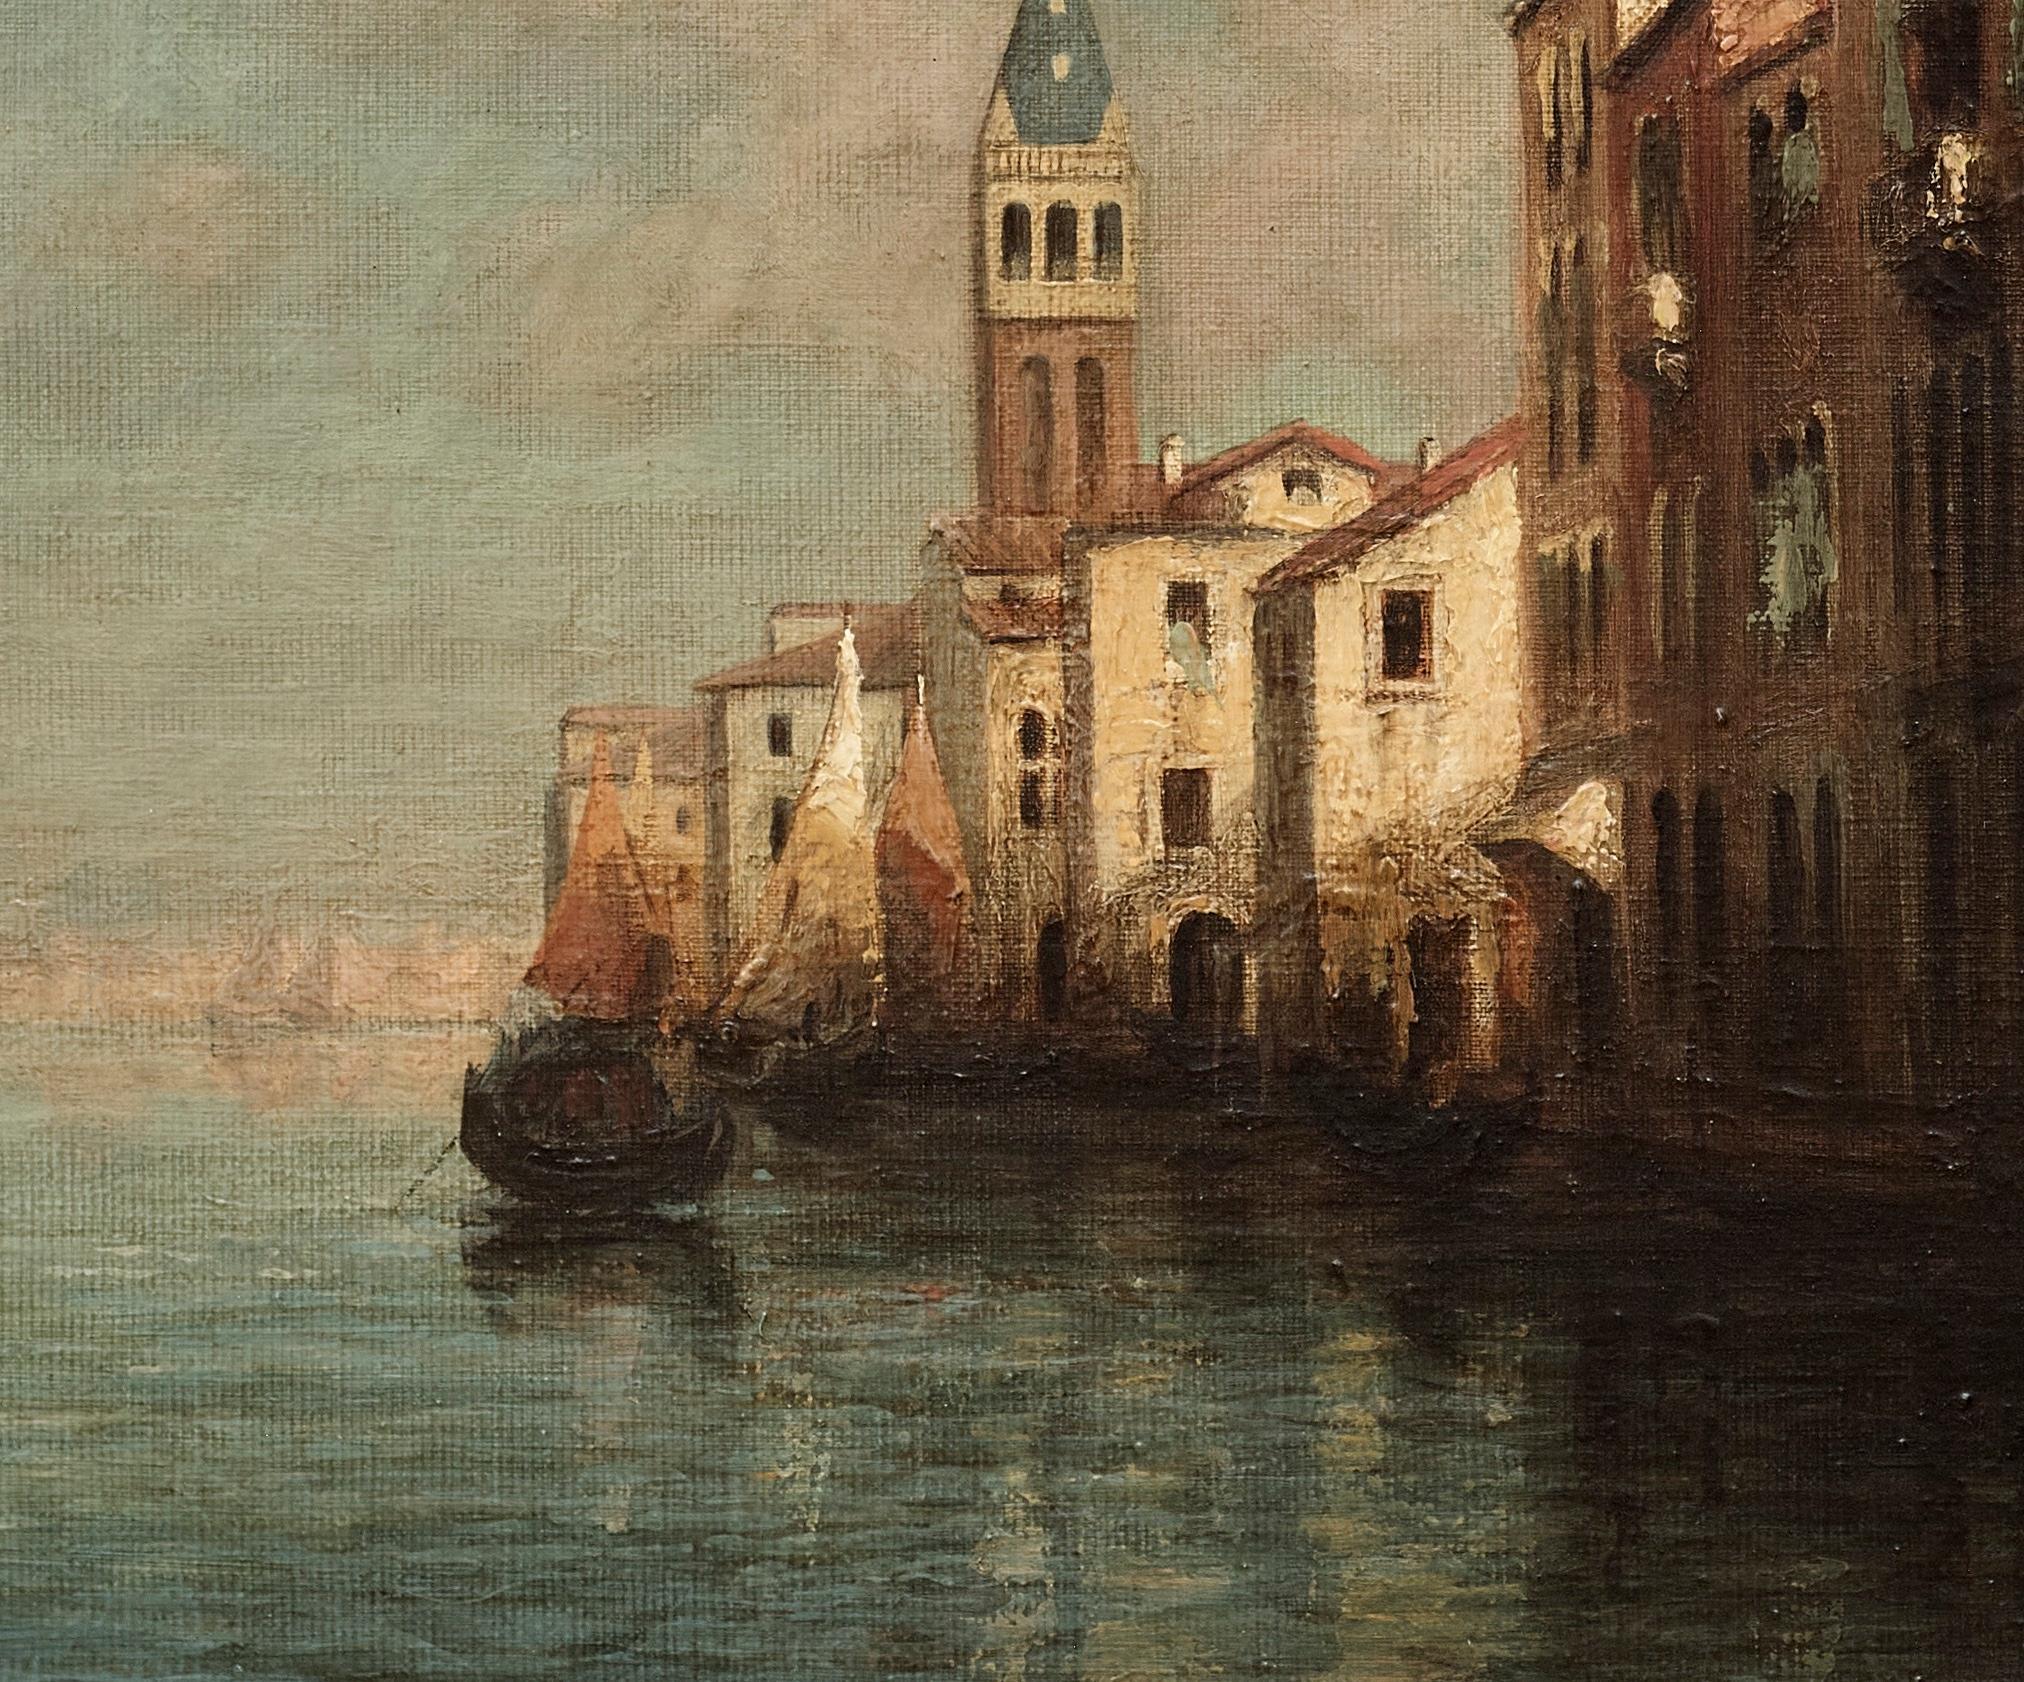 Venetian Landscape of Buildings, gondola and Canal. Venice 'Evening Glow' - Brown Landscape Painting by Antoine Bouvard Snr. 